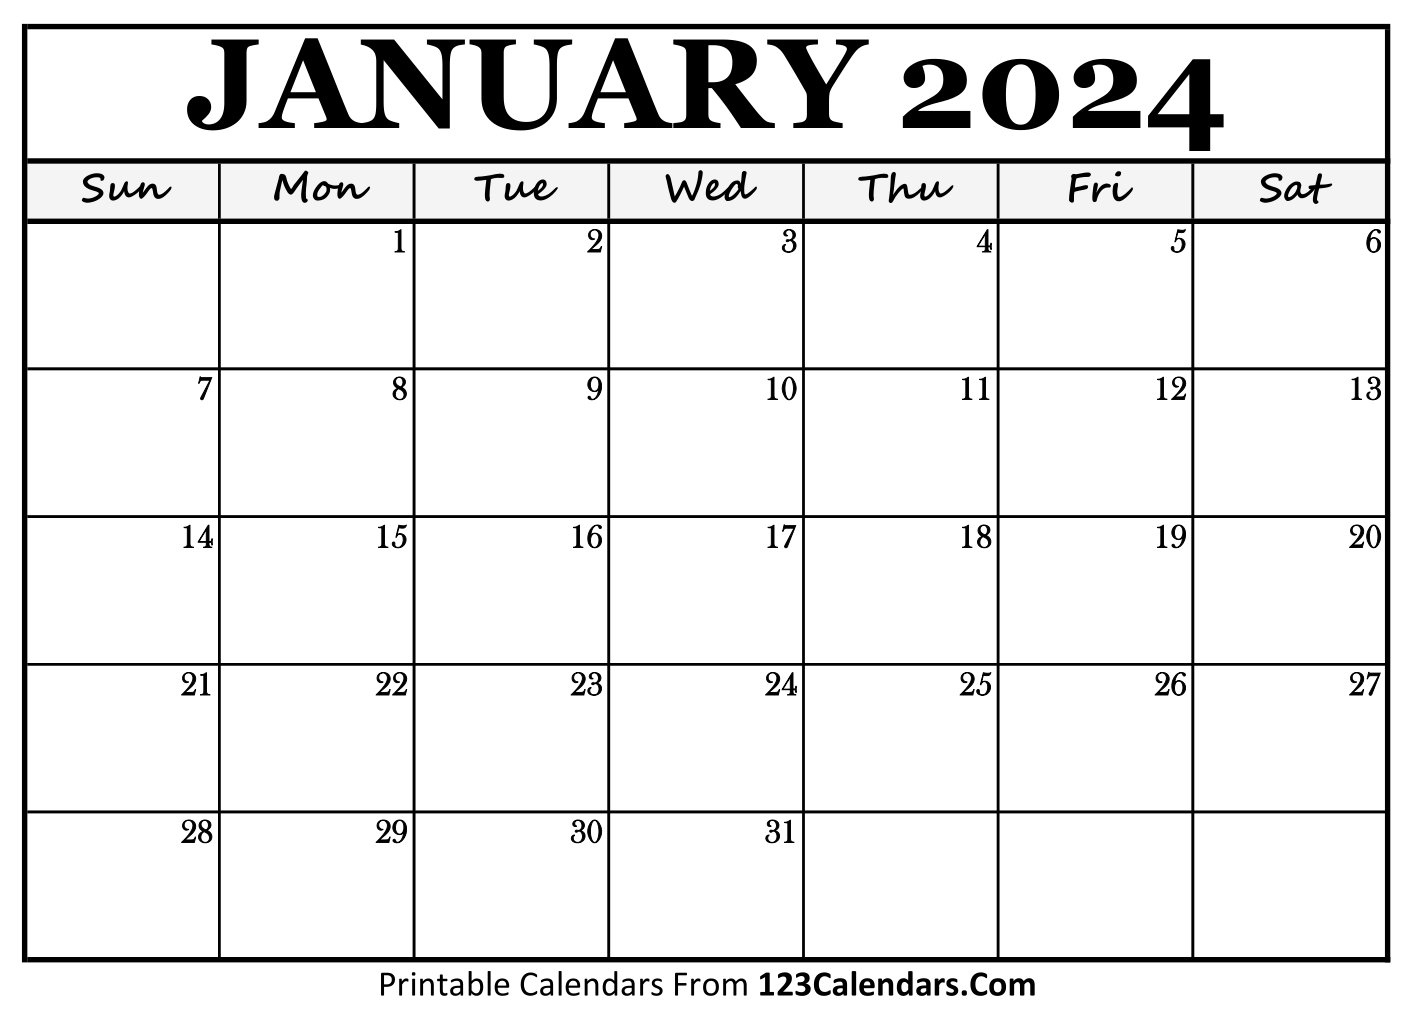 Printable January 2024 Calendar Templates - 123Calendars | January 2024 Calendar Month